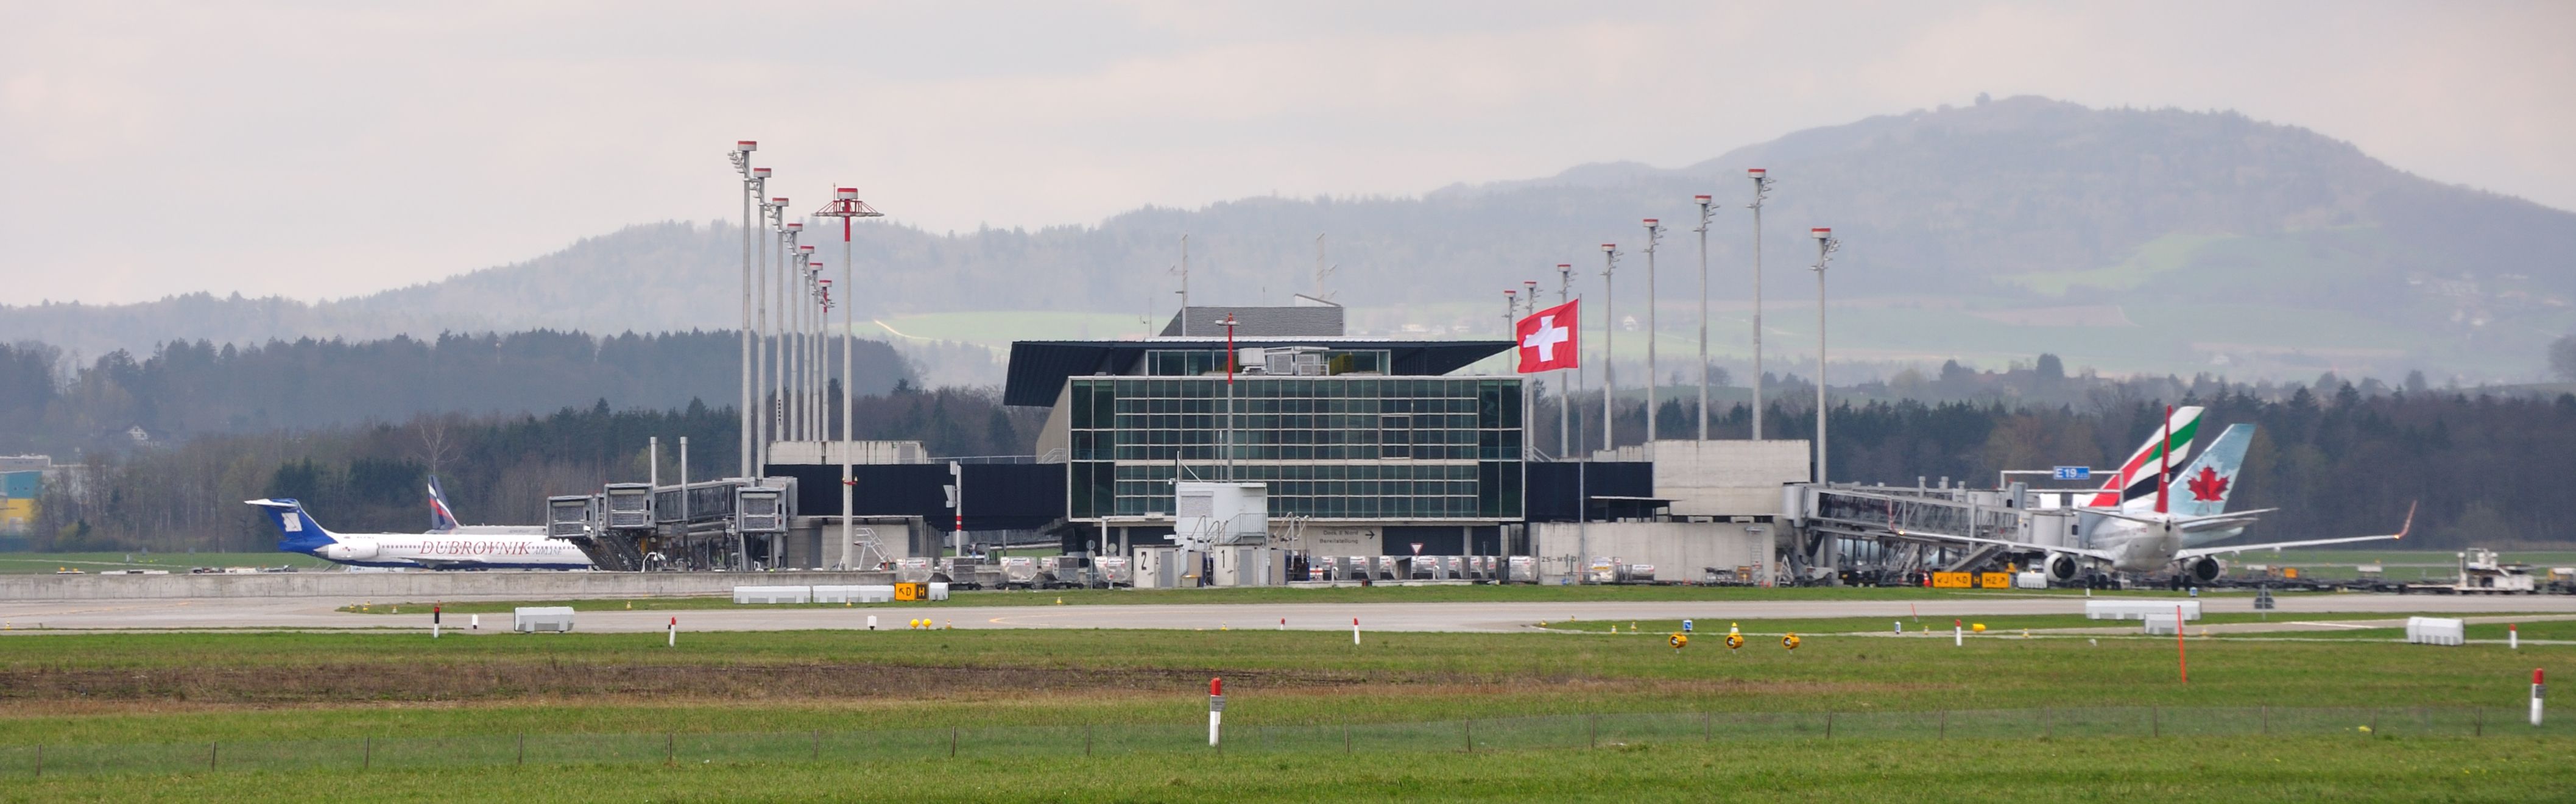 The satellite terminal at Zurich airport.